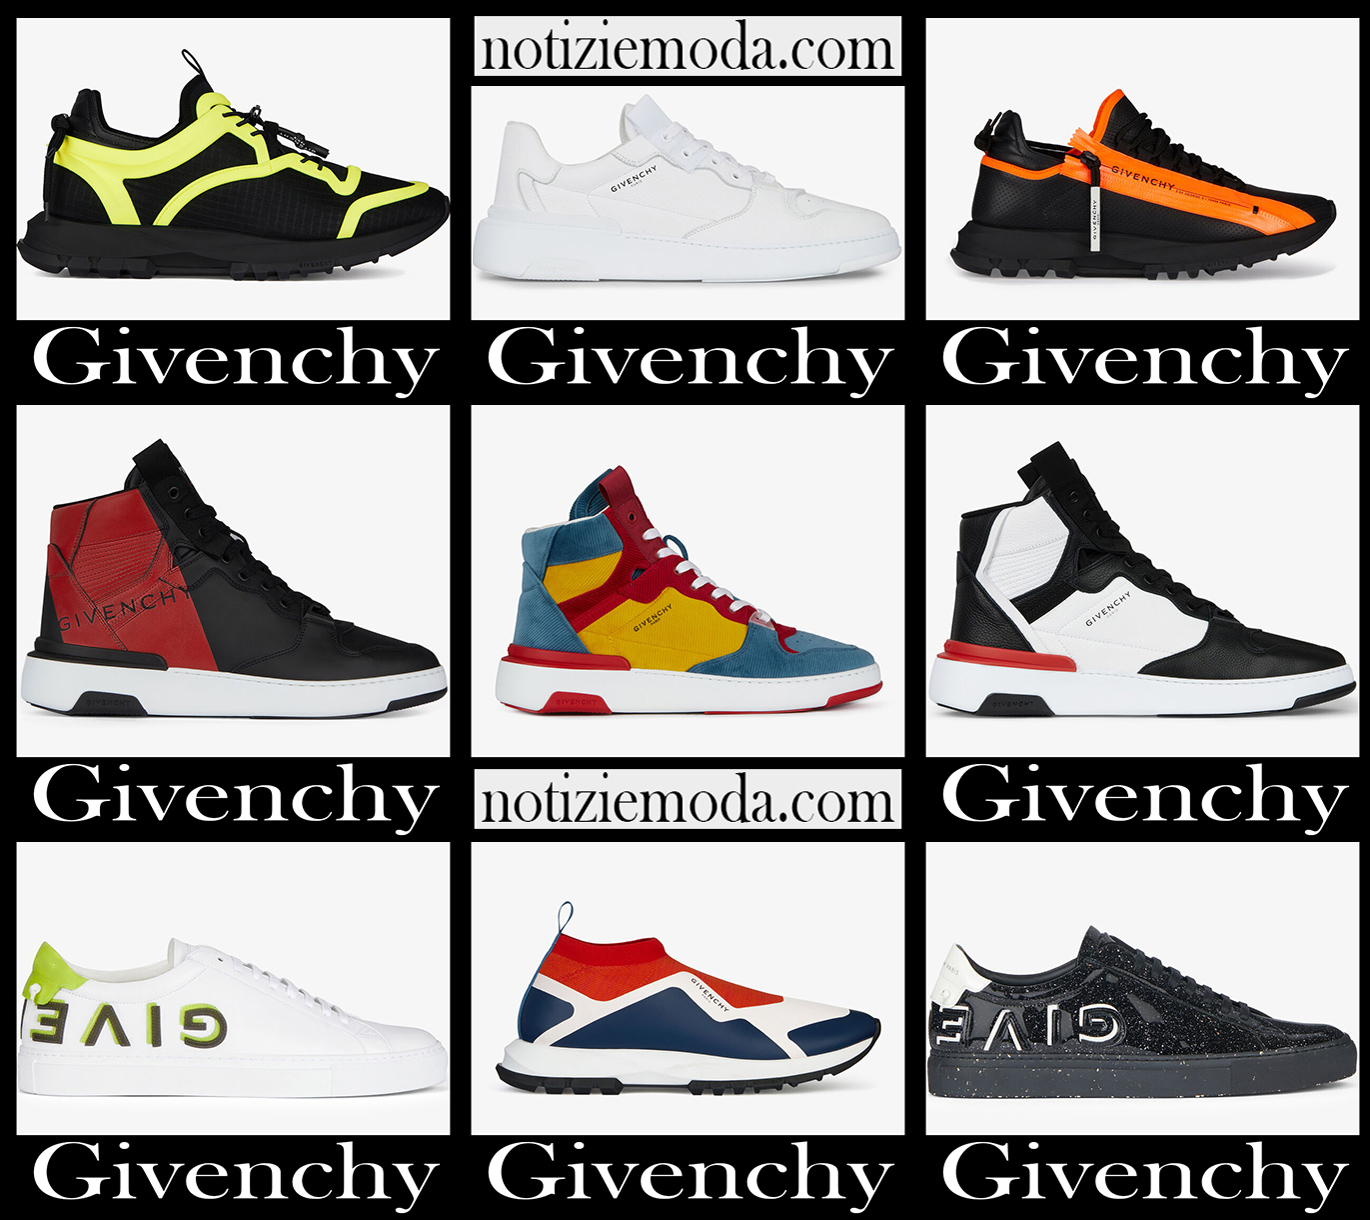 Nuovi arrivi sneakers Givenchy 2021 scarpe calzature uomo